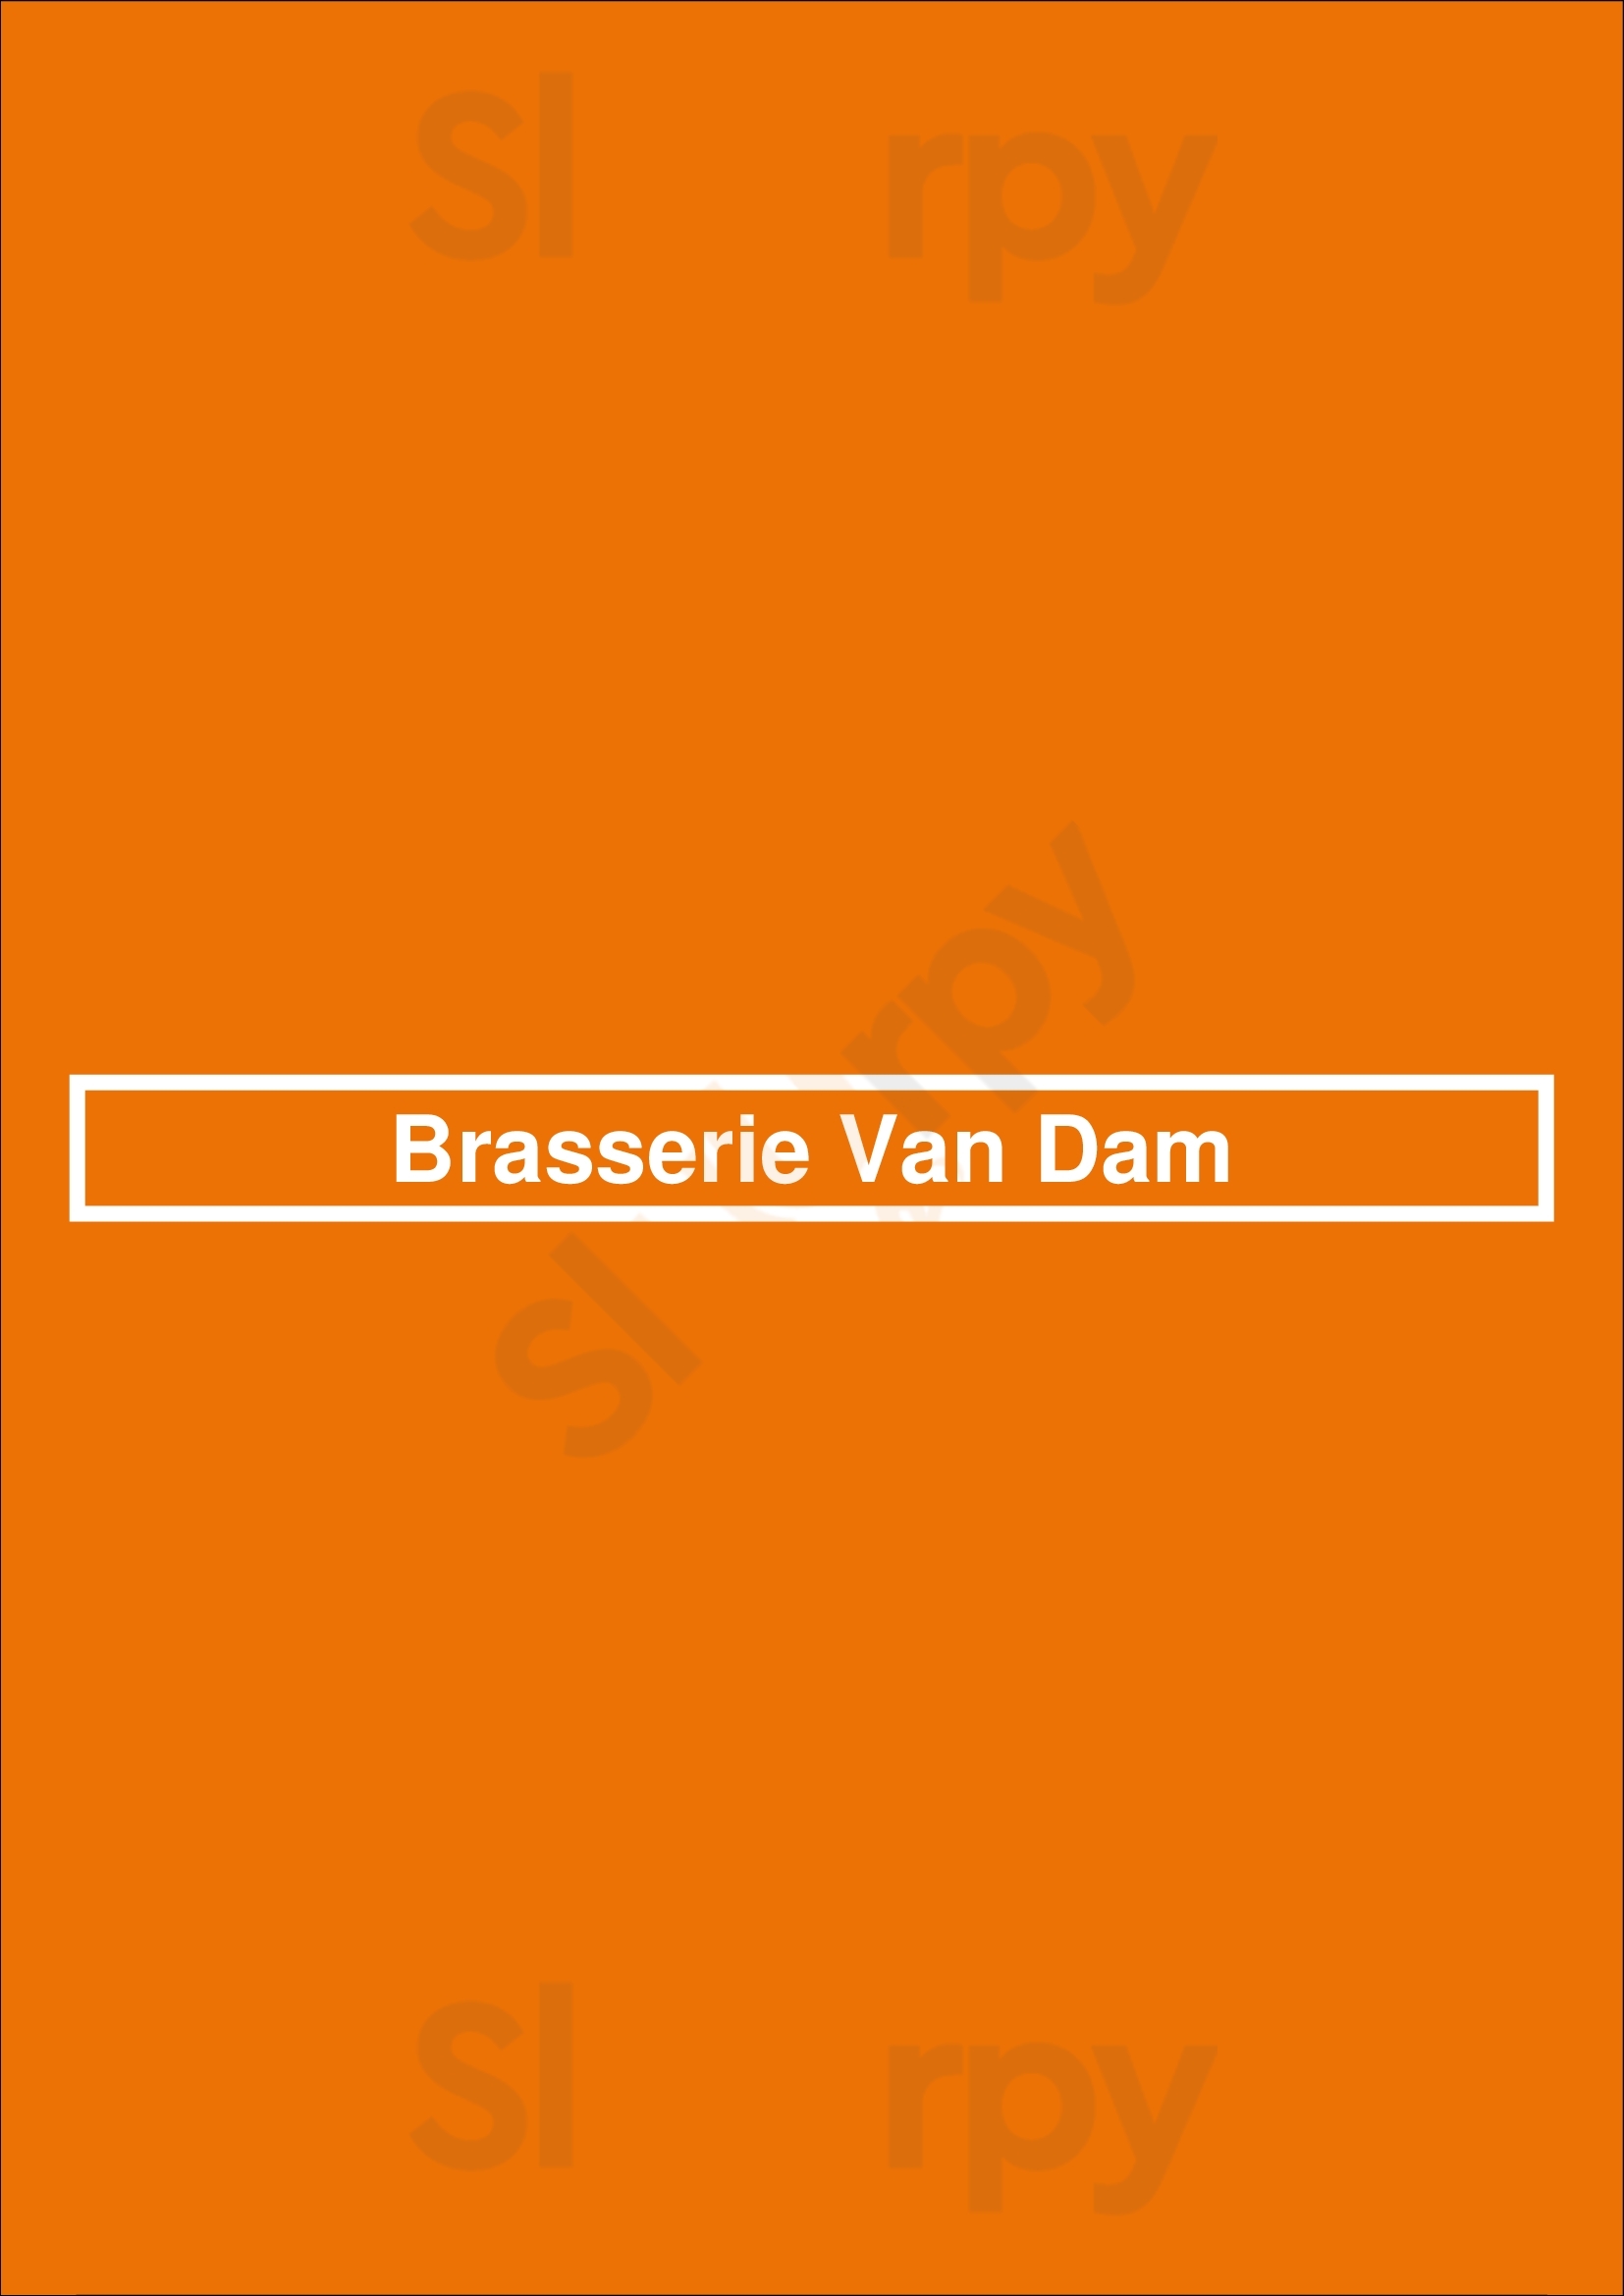 Brasserie Van Dam Amsterdam Menu - 1